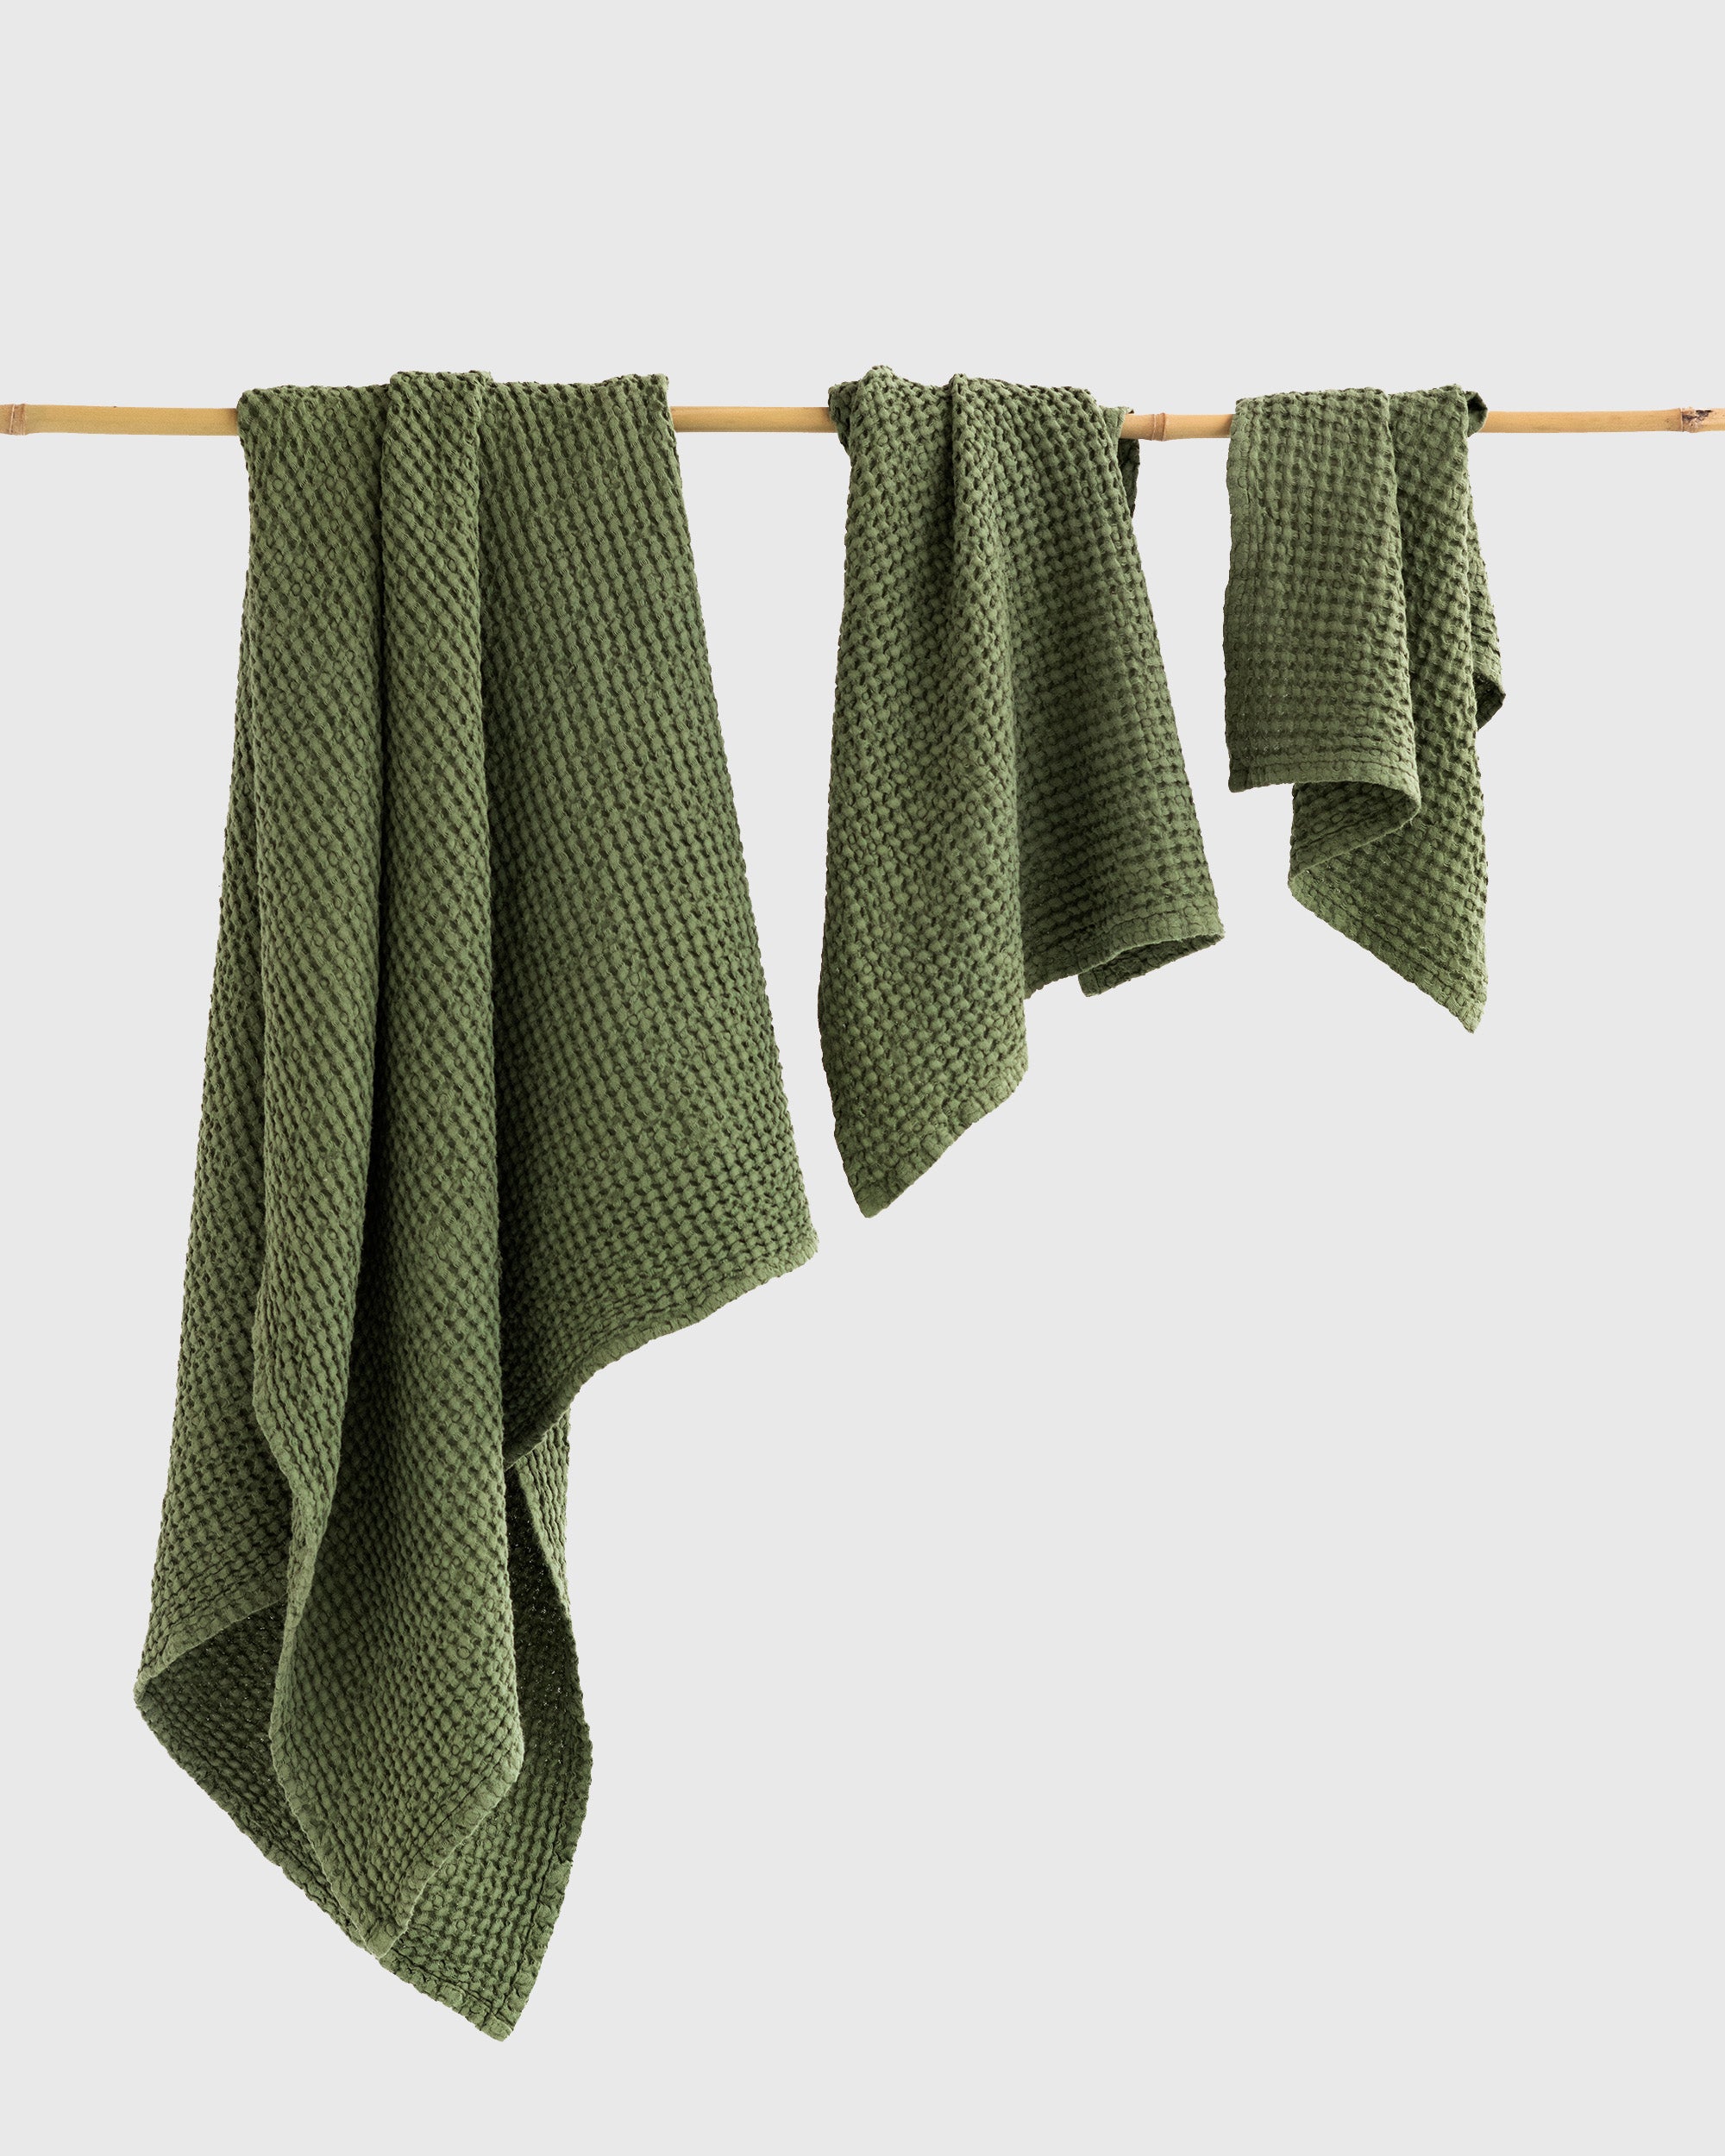 Linen Waffle Towels in Balsam Green: Towel Set, Bath Towel, Body